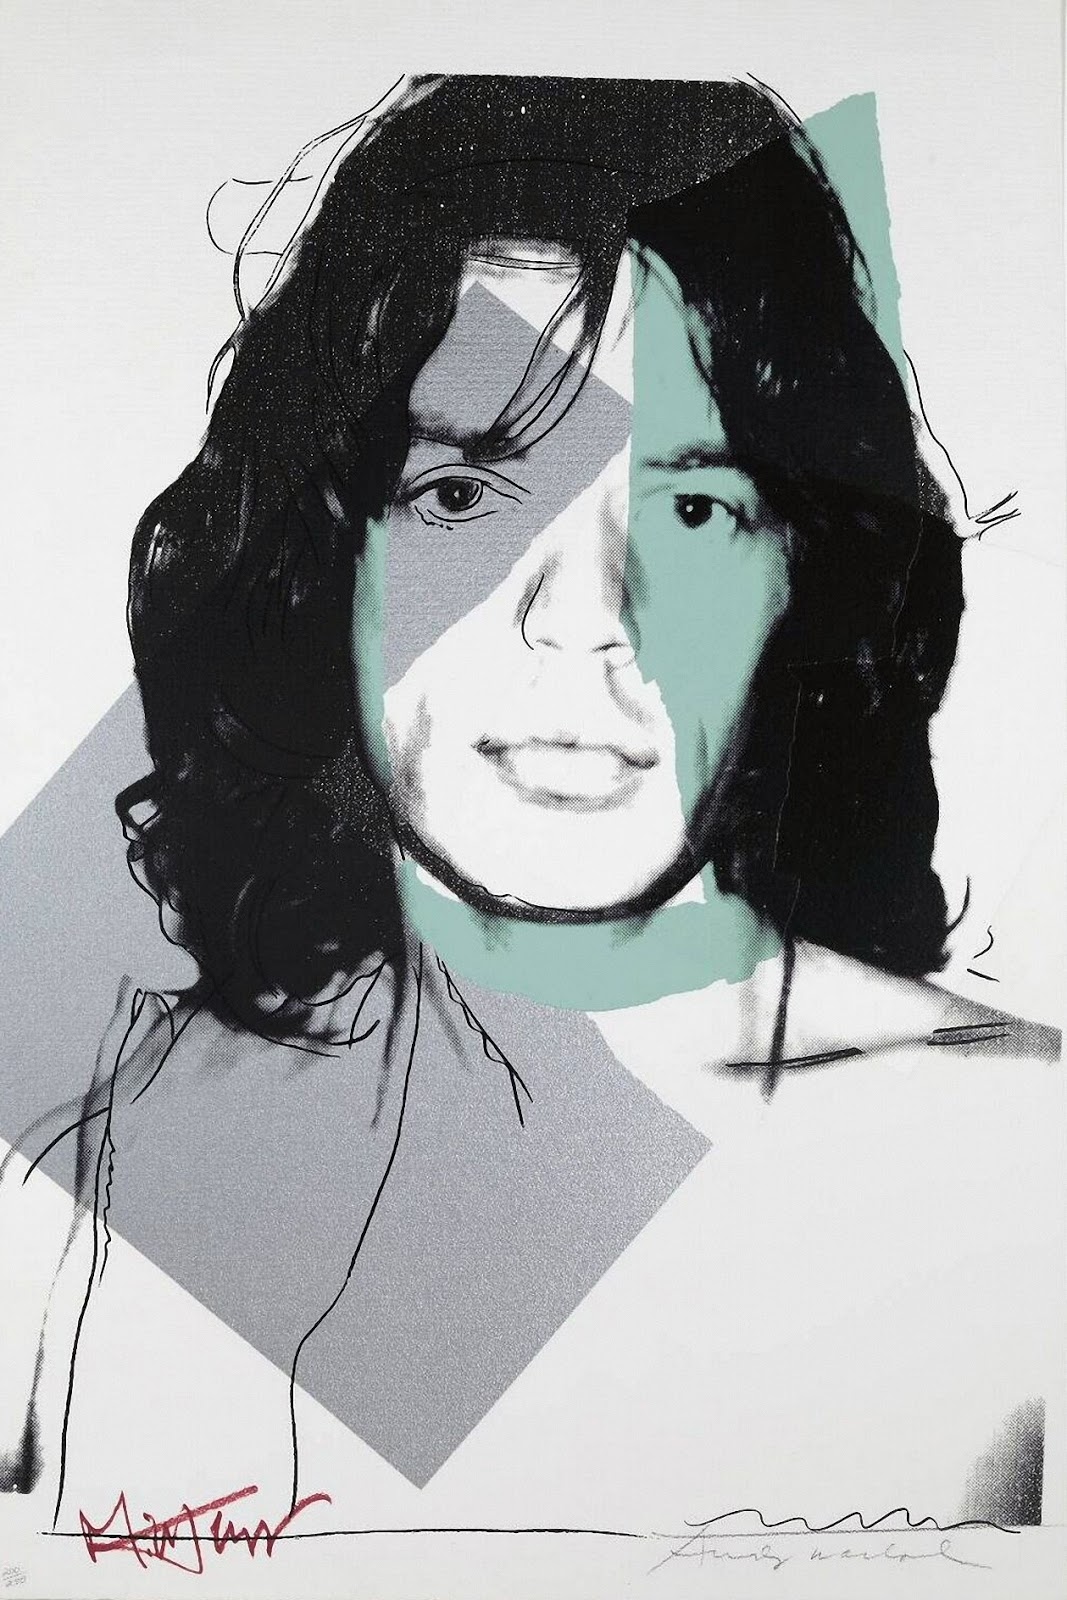 Andy+Warhol-1928-1987 (118).jpg